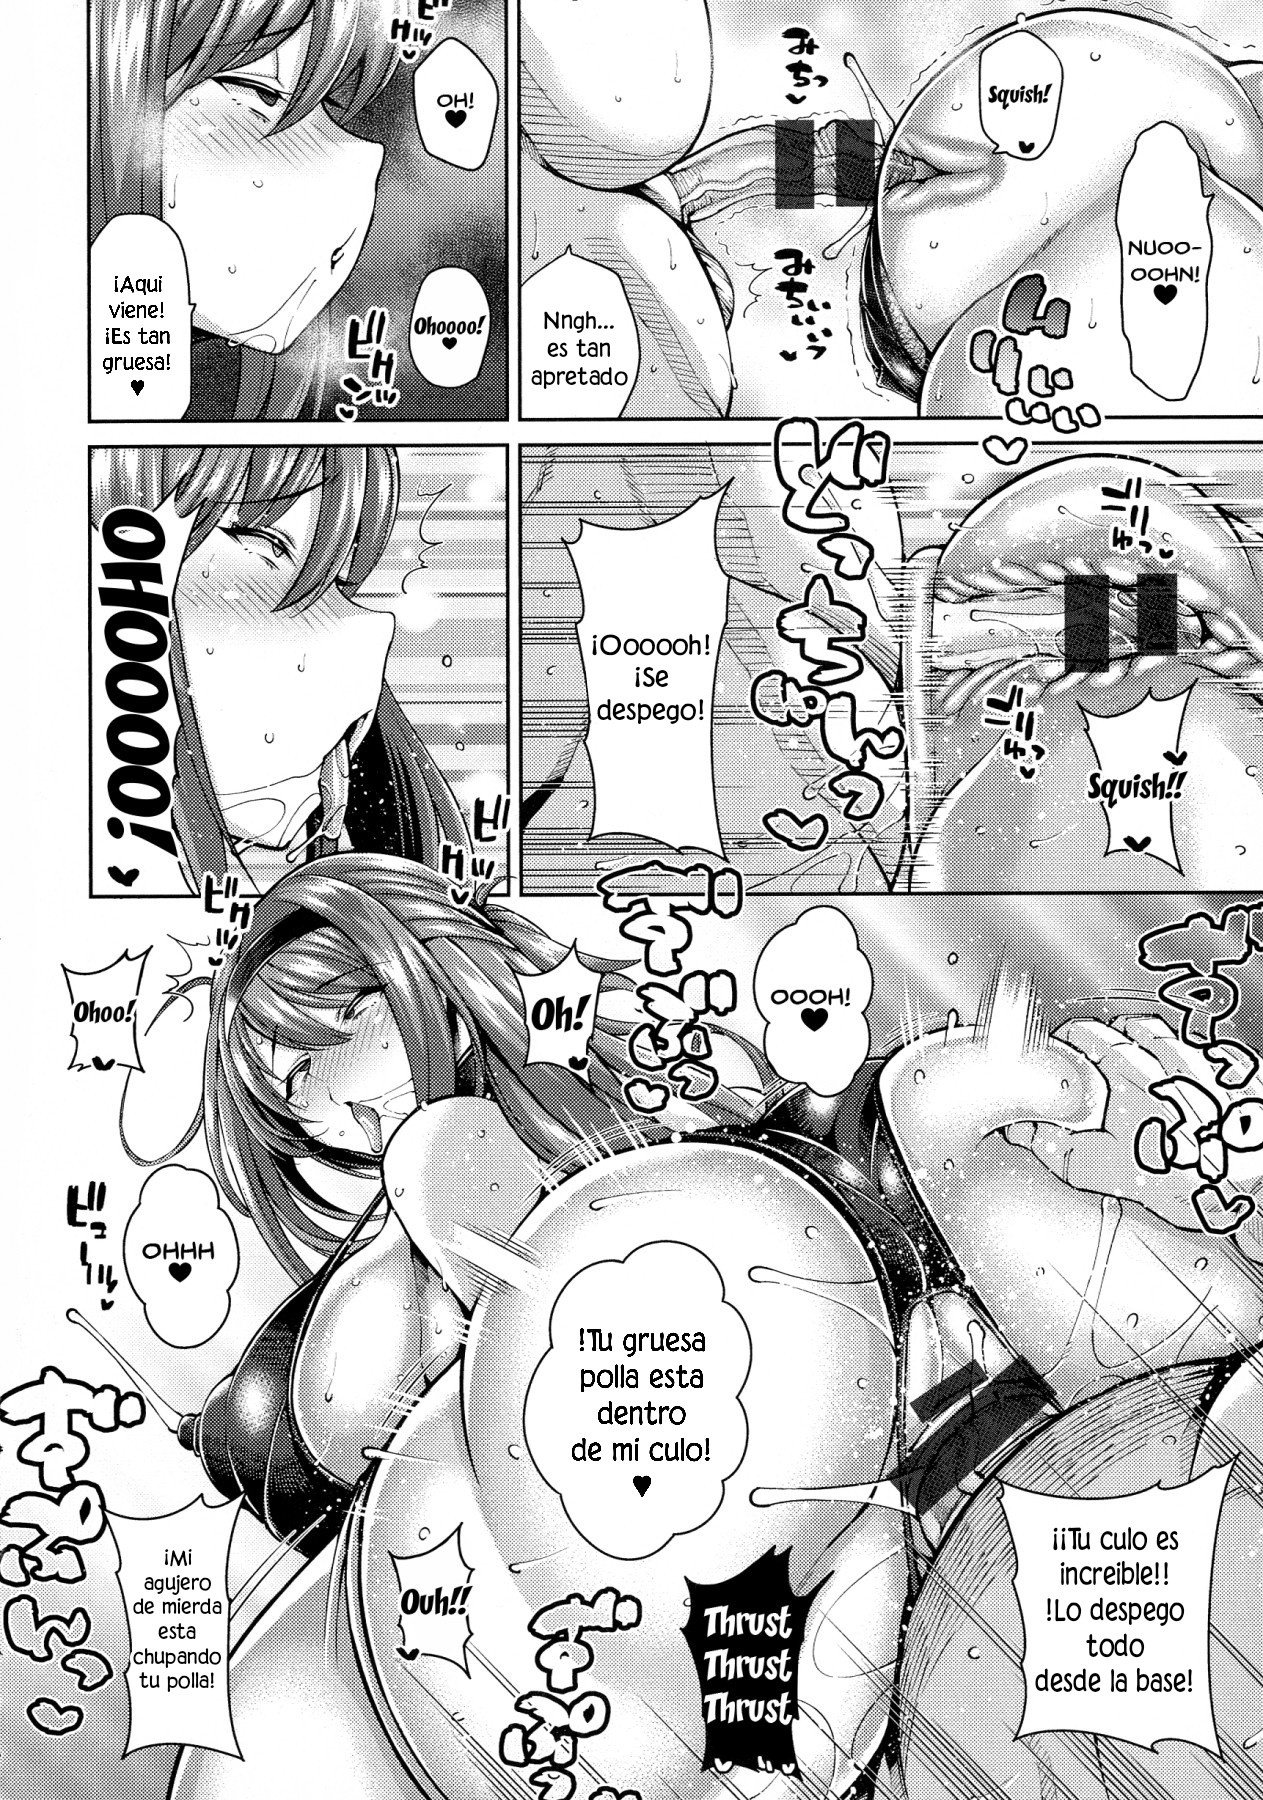 [Drachef] Momoko Sensei is Fun Sex-Ed Class (Koubi no Ojikan) - 13